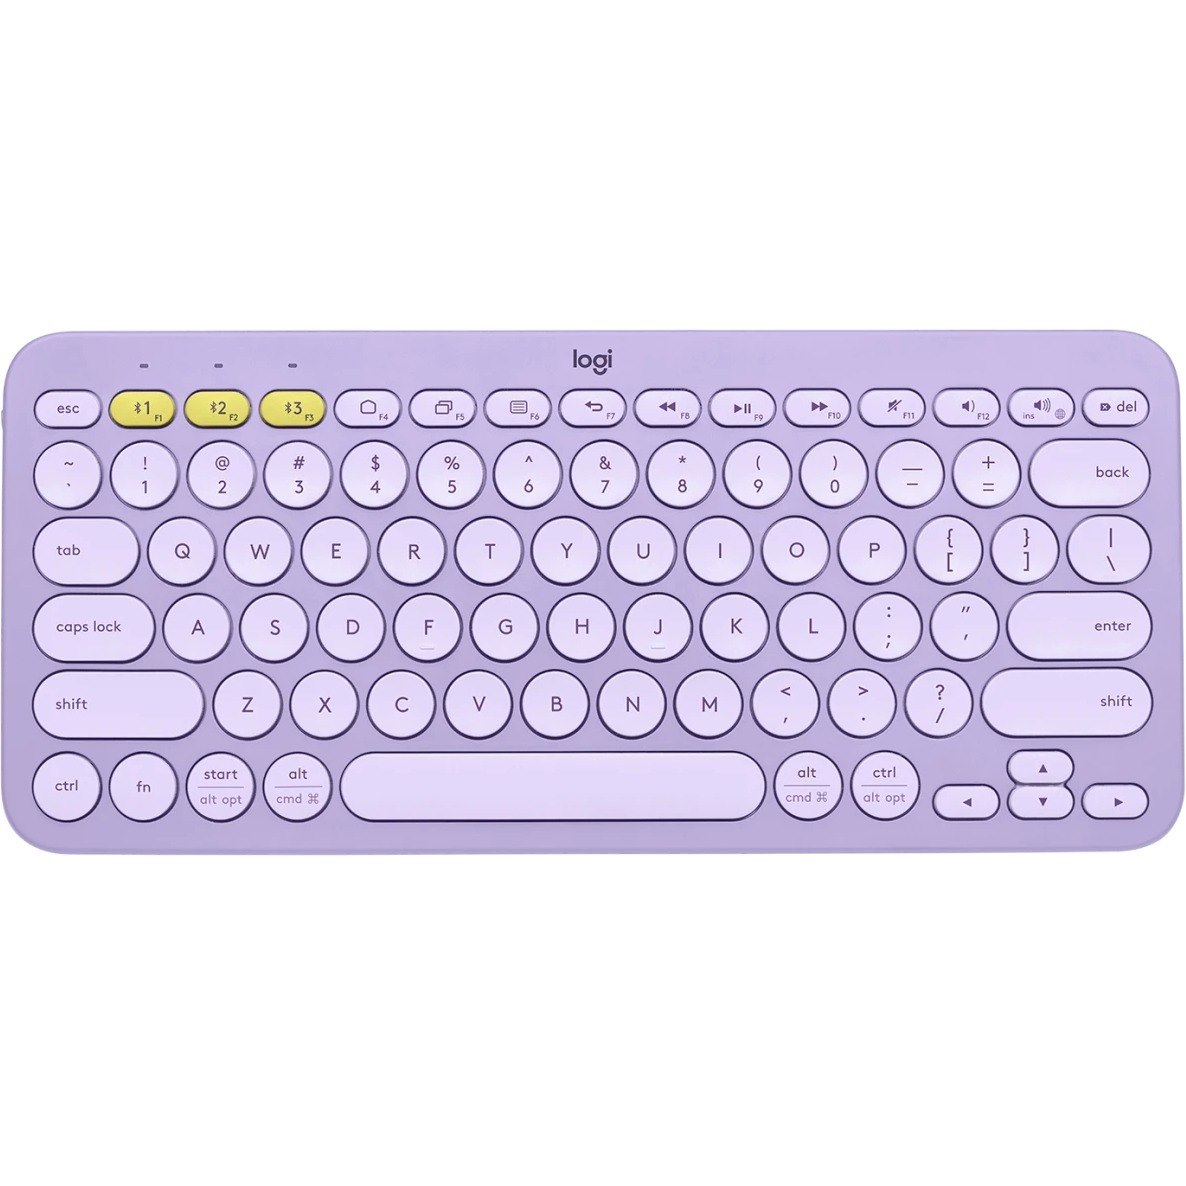 Logitech K380 Keyboard - Wireless Connectivity - English - Lavender Lemonade